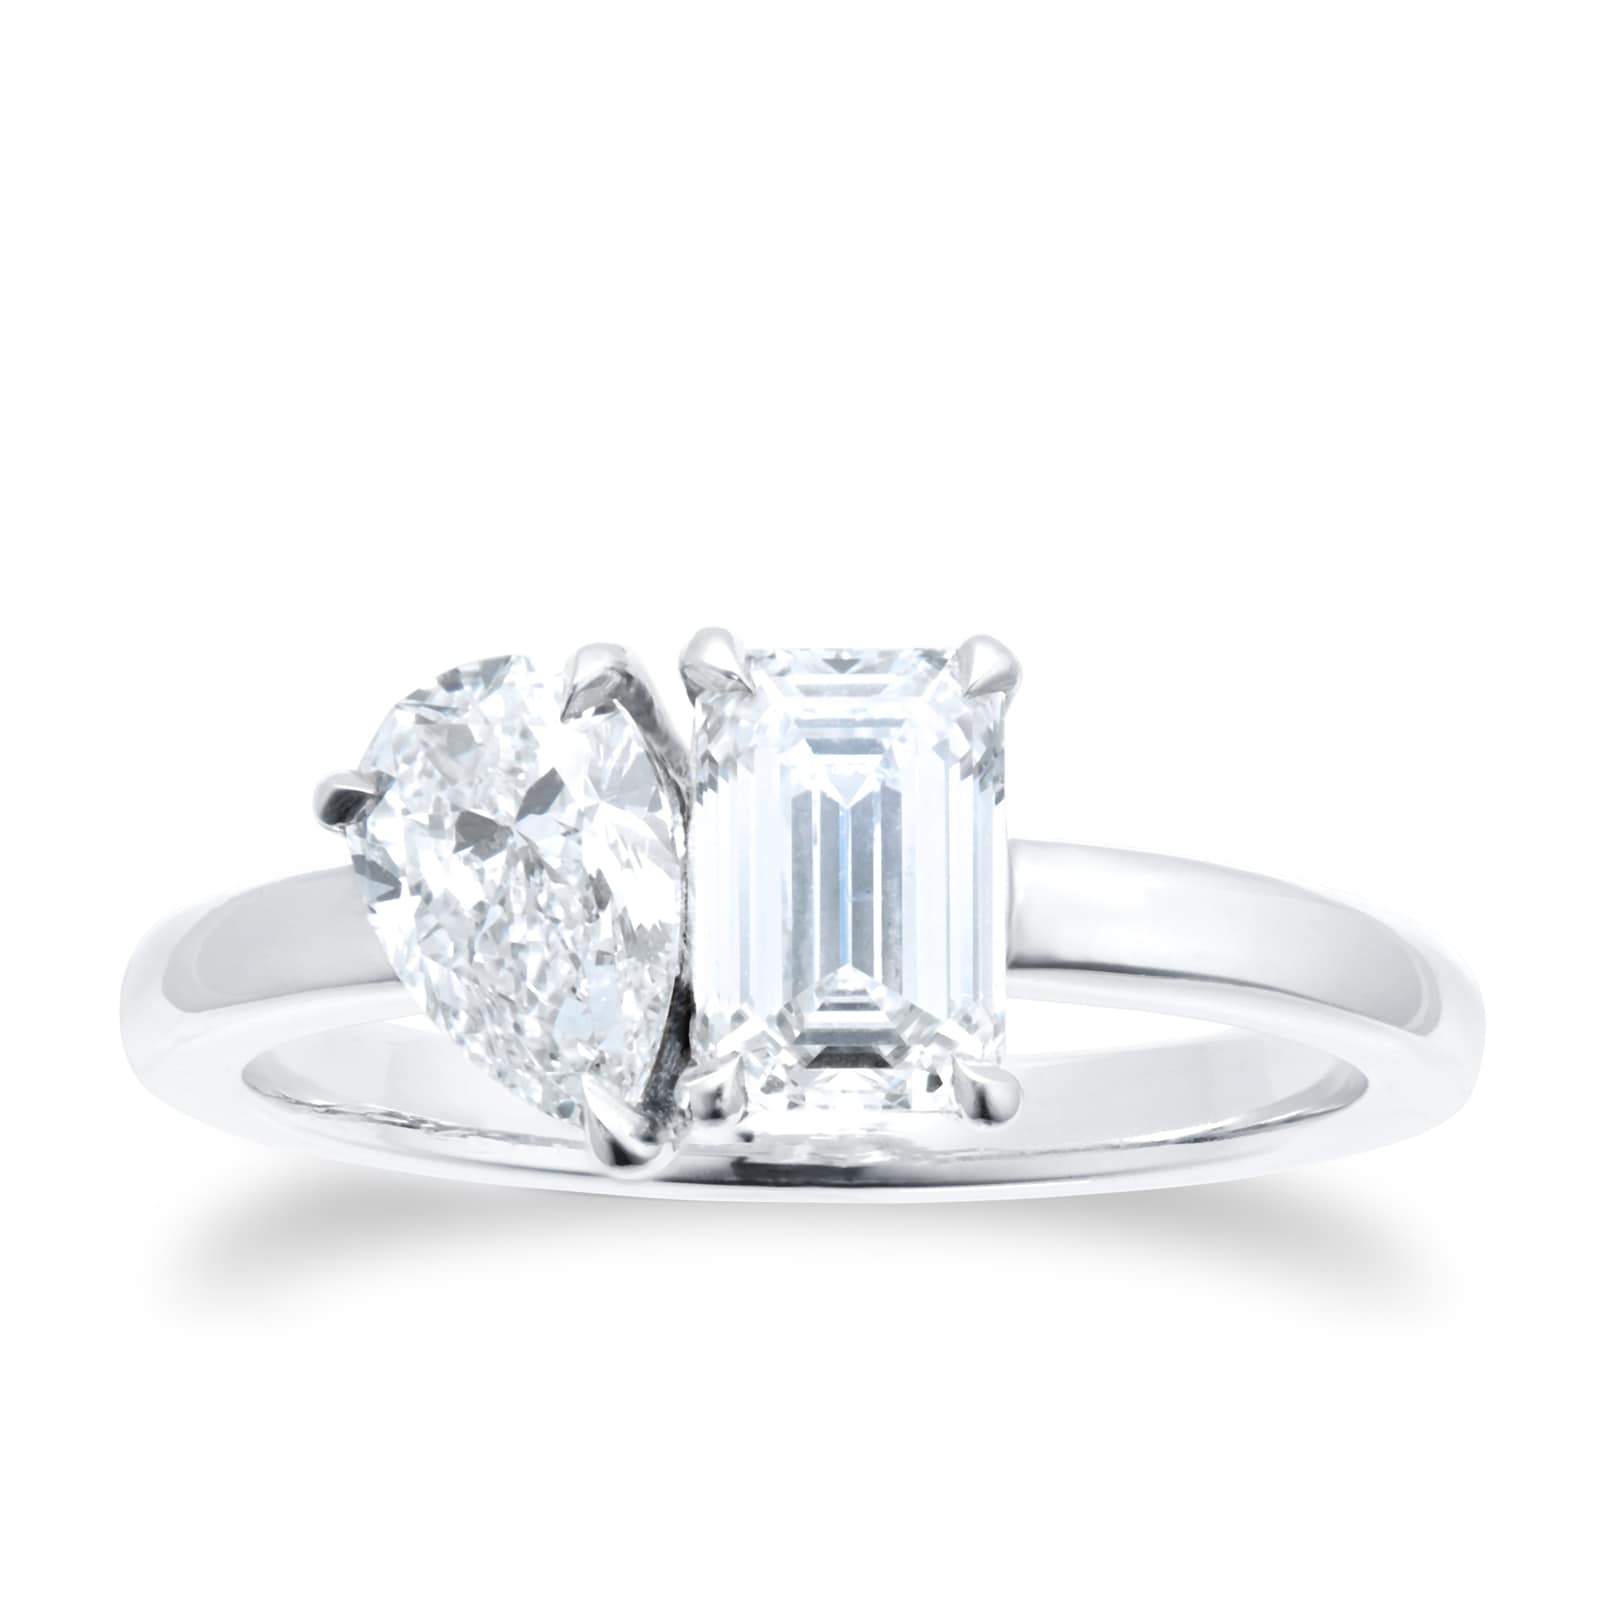 Platinum Toi et Moi 1.60cttw Pear & Emerald Cut Diamond Ring - Ring Size M